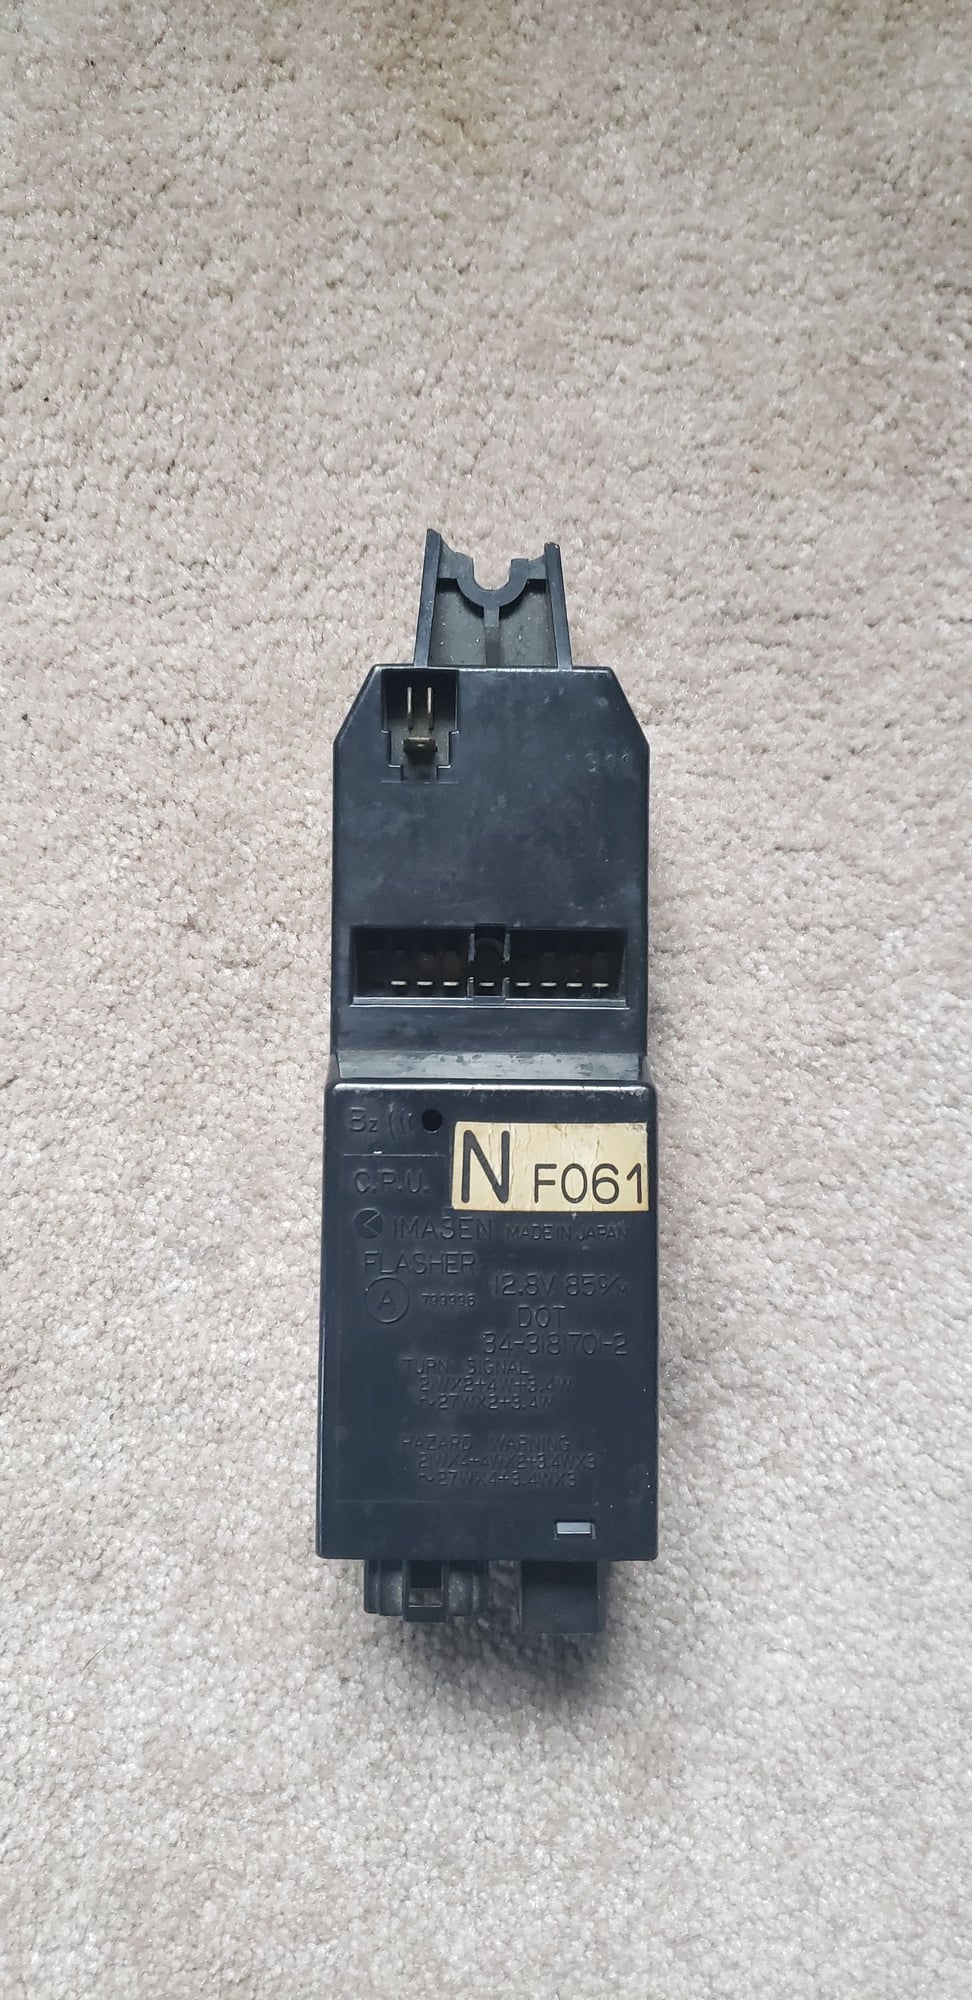 Miscellaneous - FC S5: Injectors, AC Compressor, CPU, Alternator. FD Throttle body. - Used - 1989 to 2003 Mazda RX-7 - Norcross, GA 30093, United States